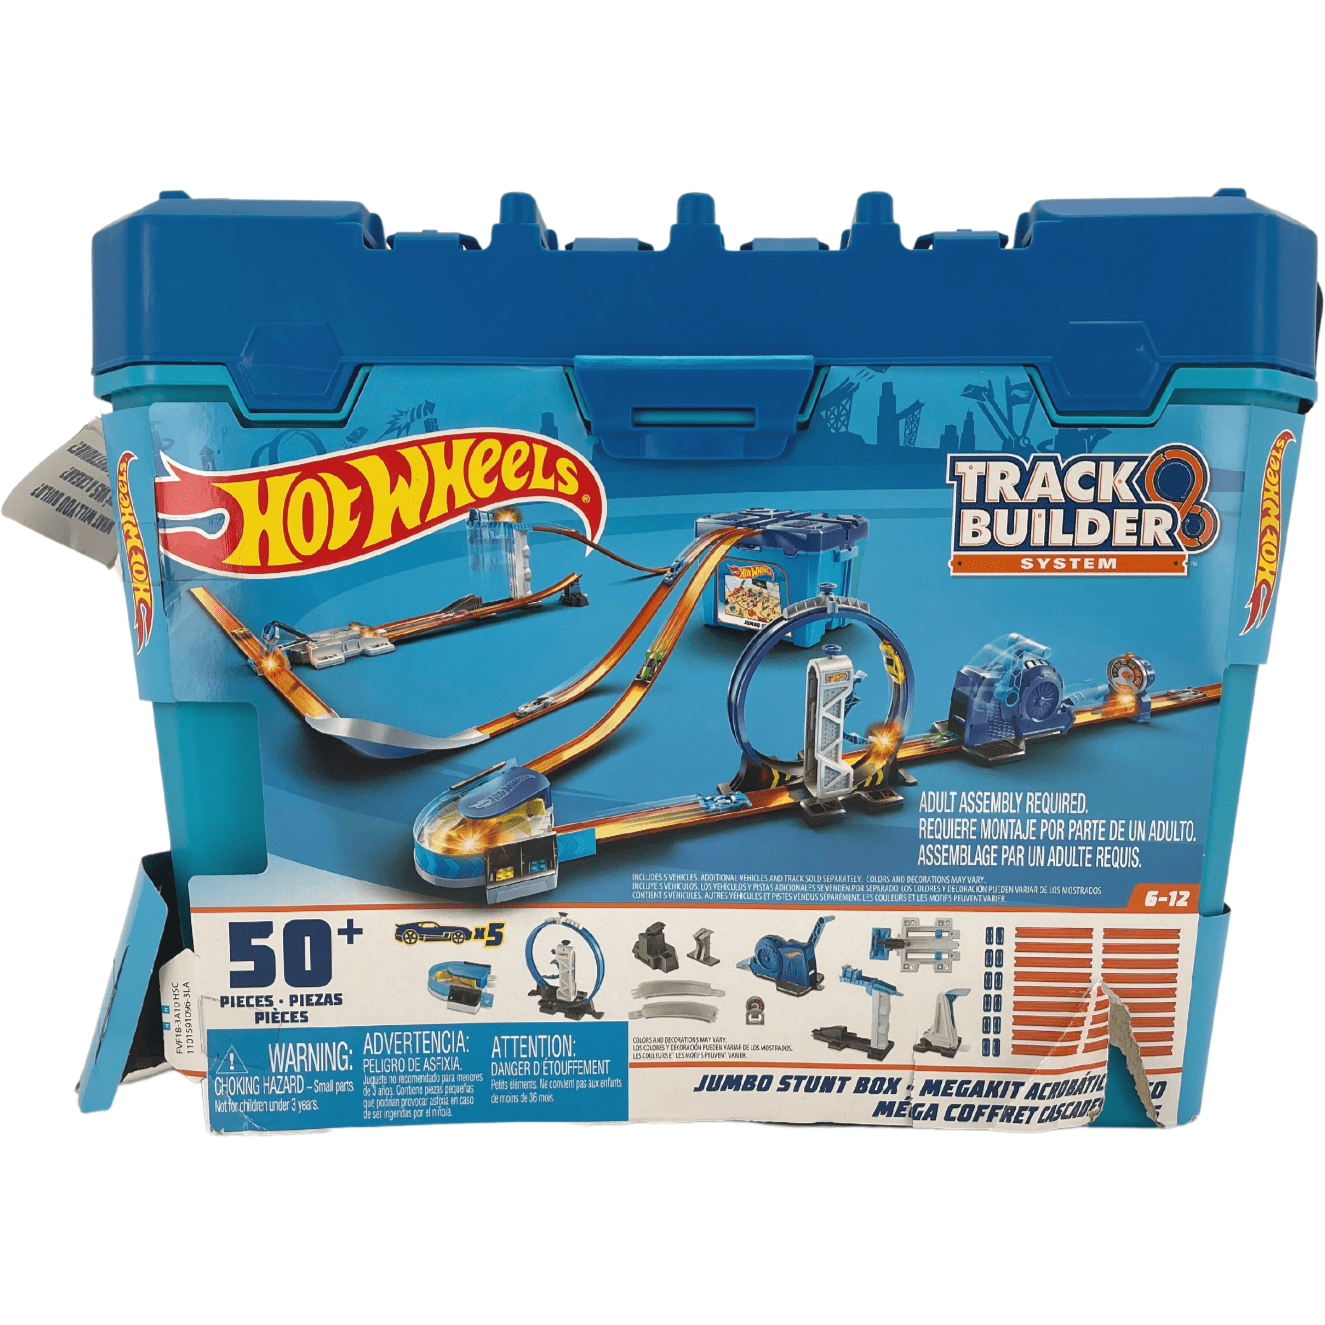 Hot Wheels Track Builder System / Jumbo Stunt Box / 50+ Pieces ** DEALS**